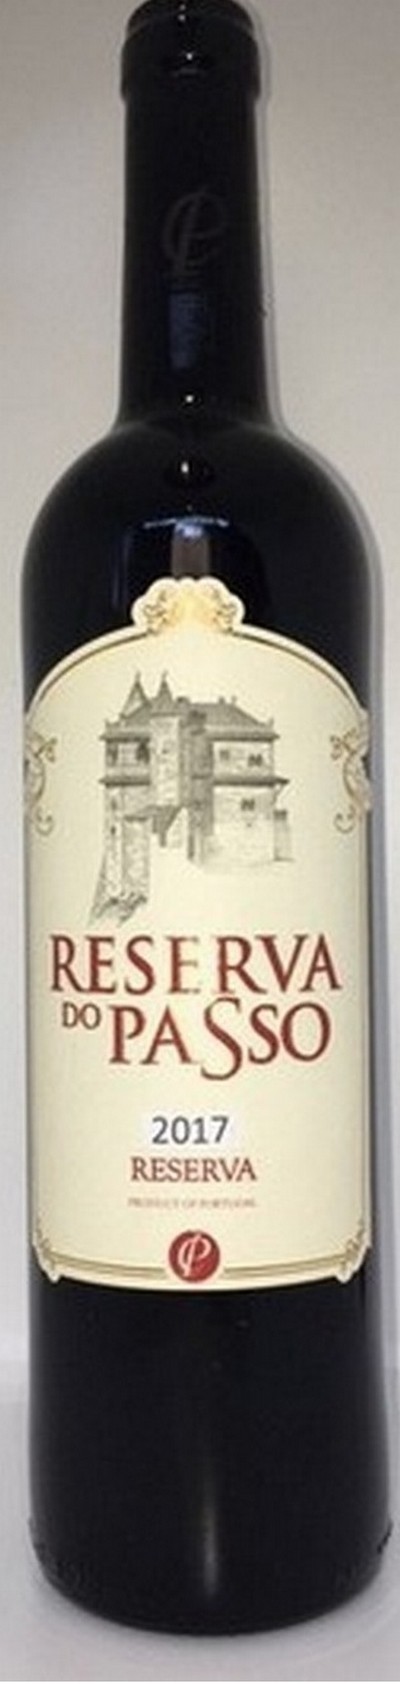 reserva-do-passo-2019